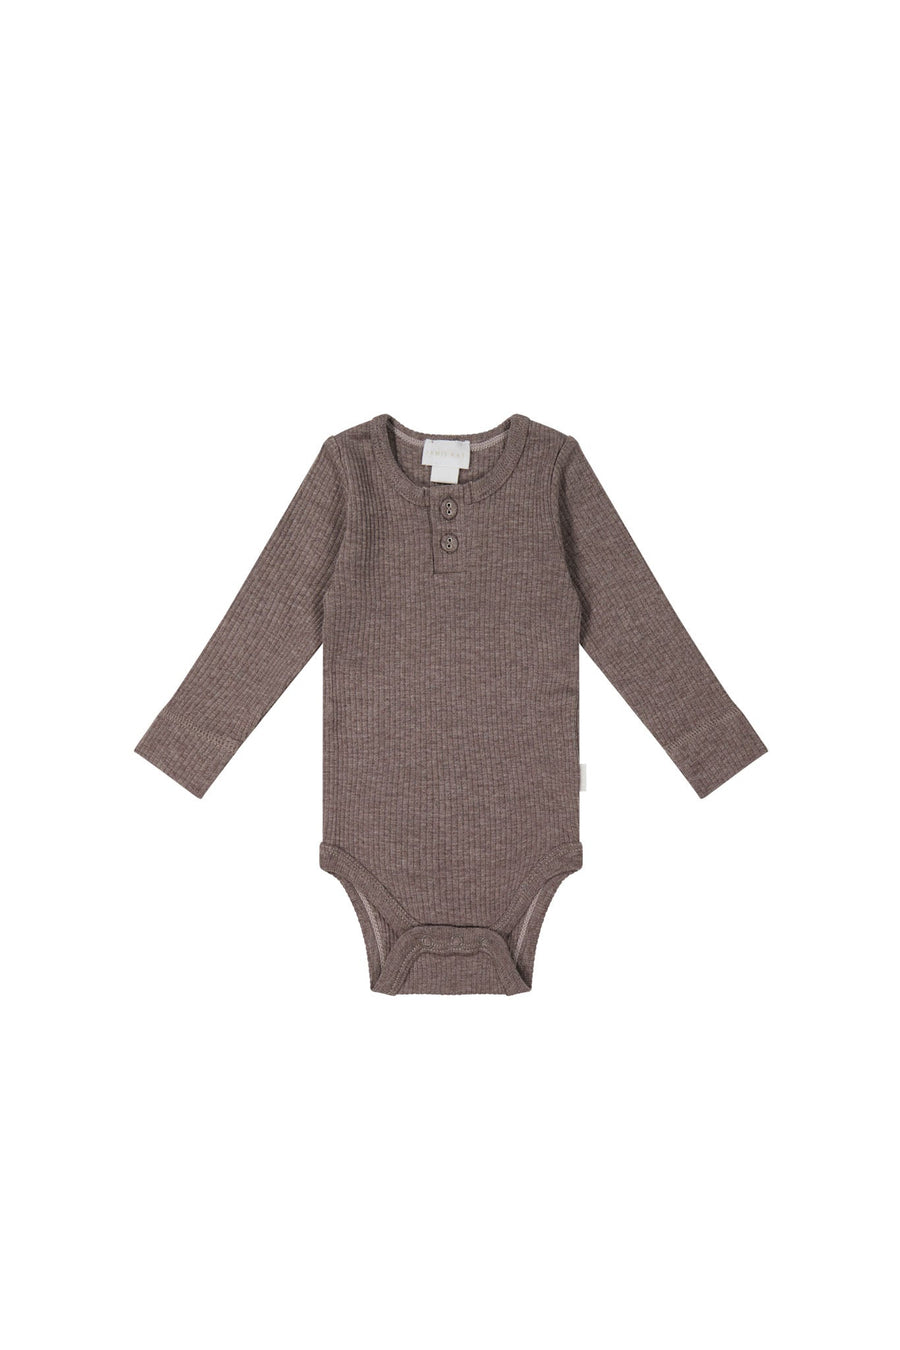 Organic Cotton Modal Long Sleeve Bodysuit - Truffle Marle Childrens Bodysuit from Jamie Kay USA